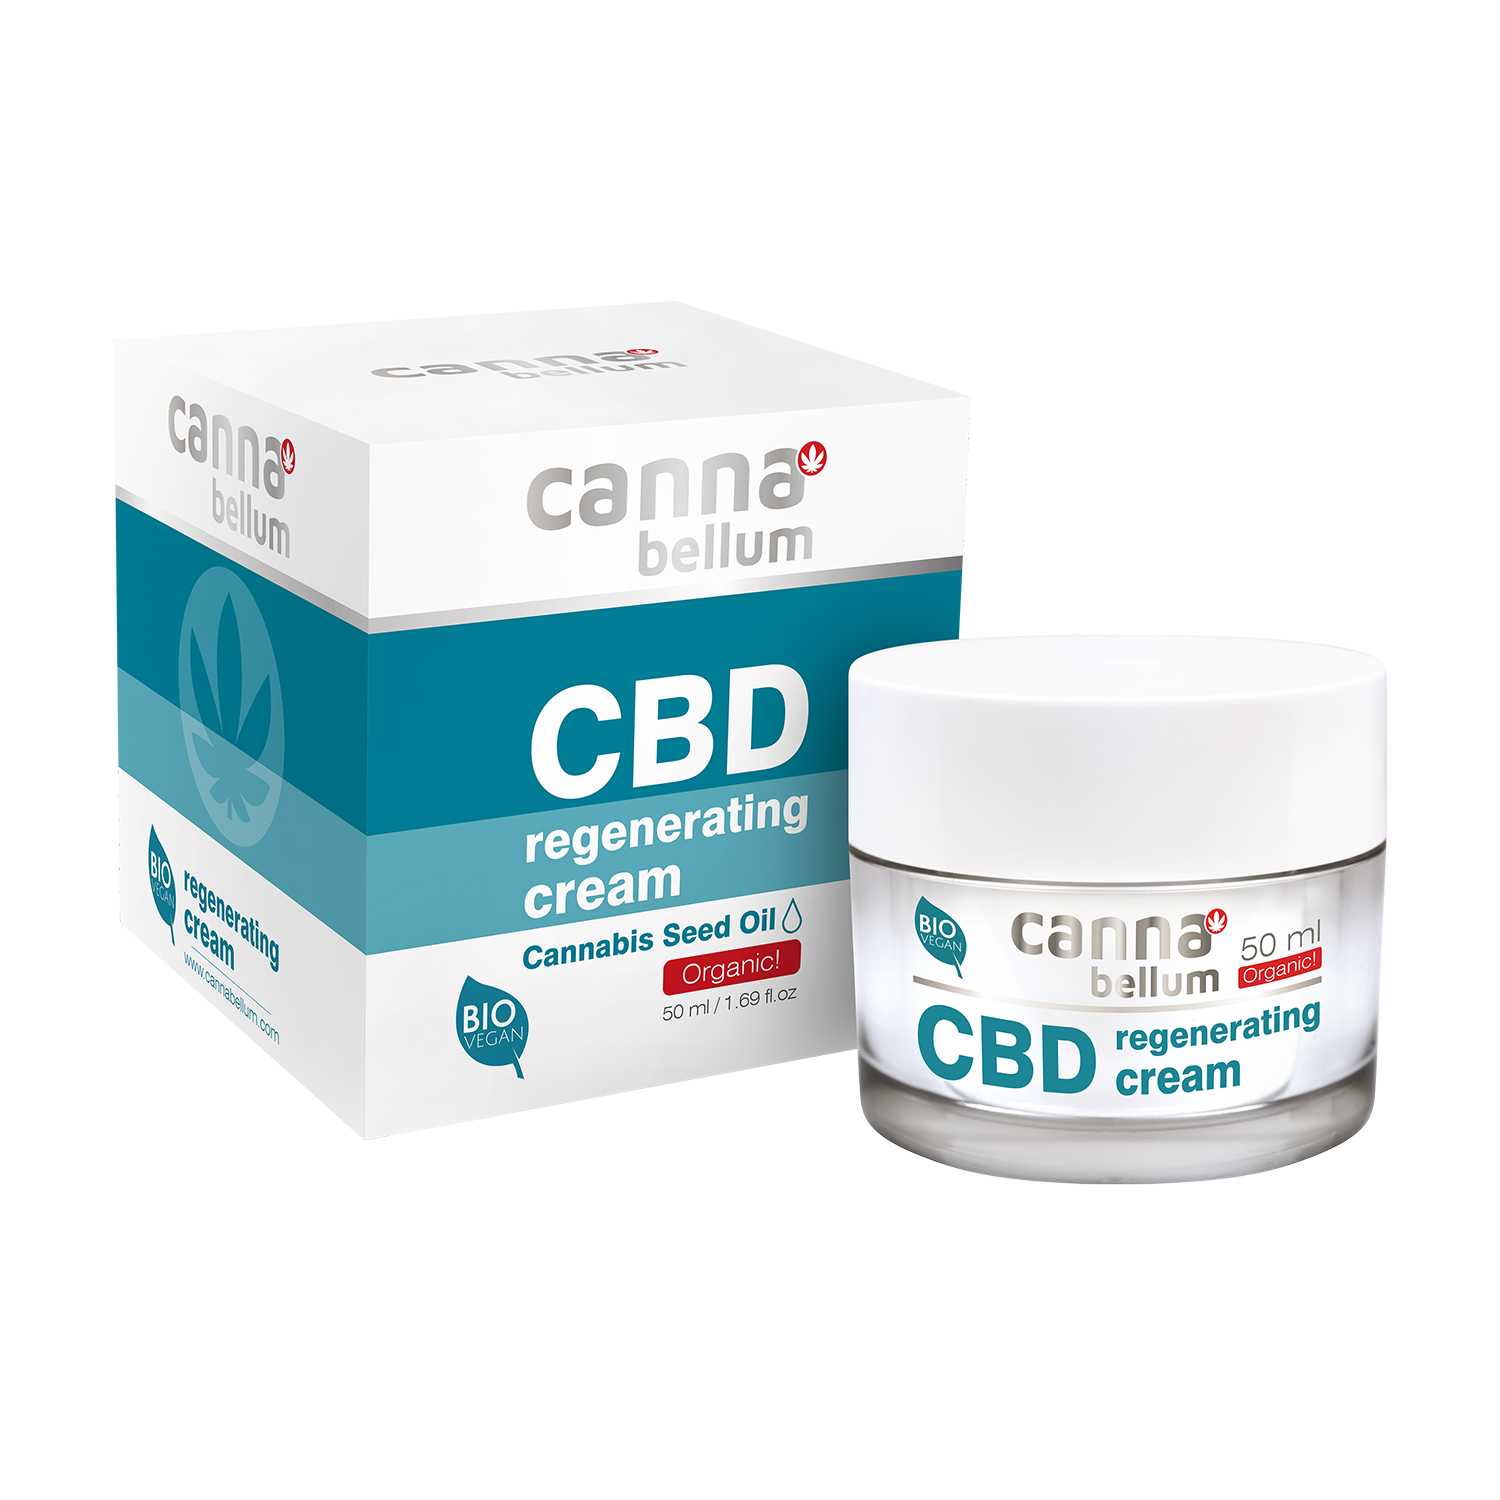 Cannabellum CBD regenerating cream 50ml P1253 komplet WEB 87